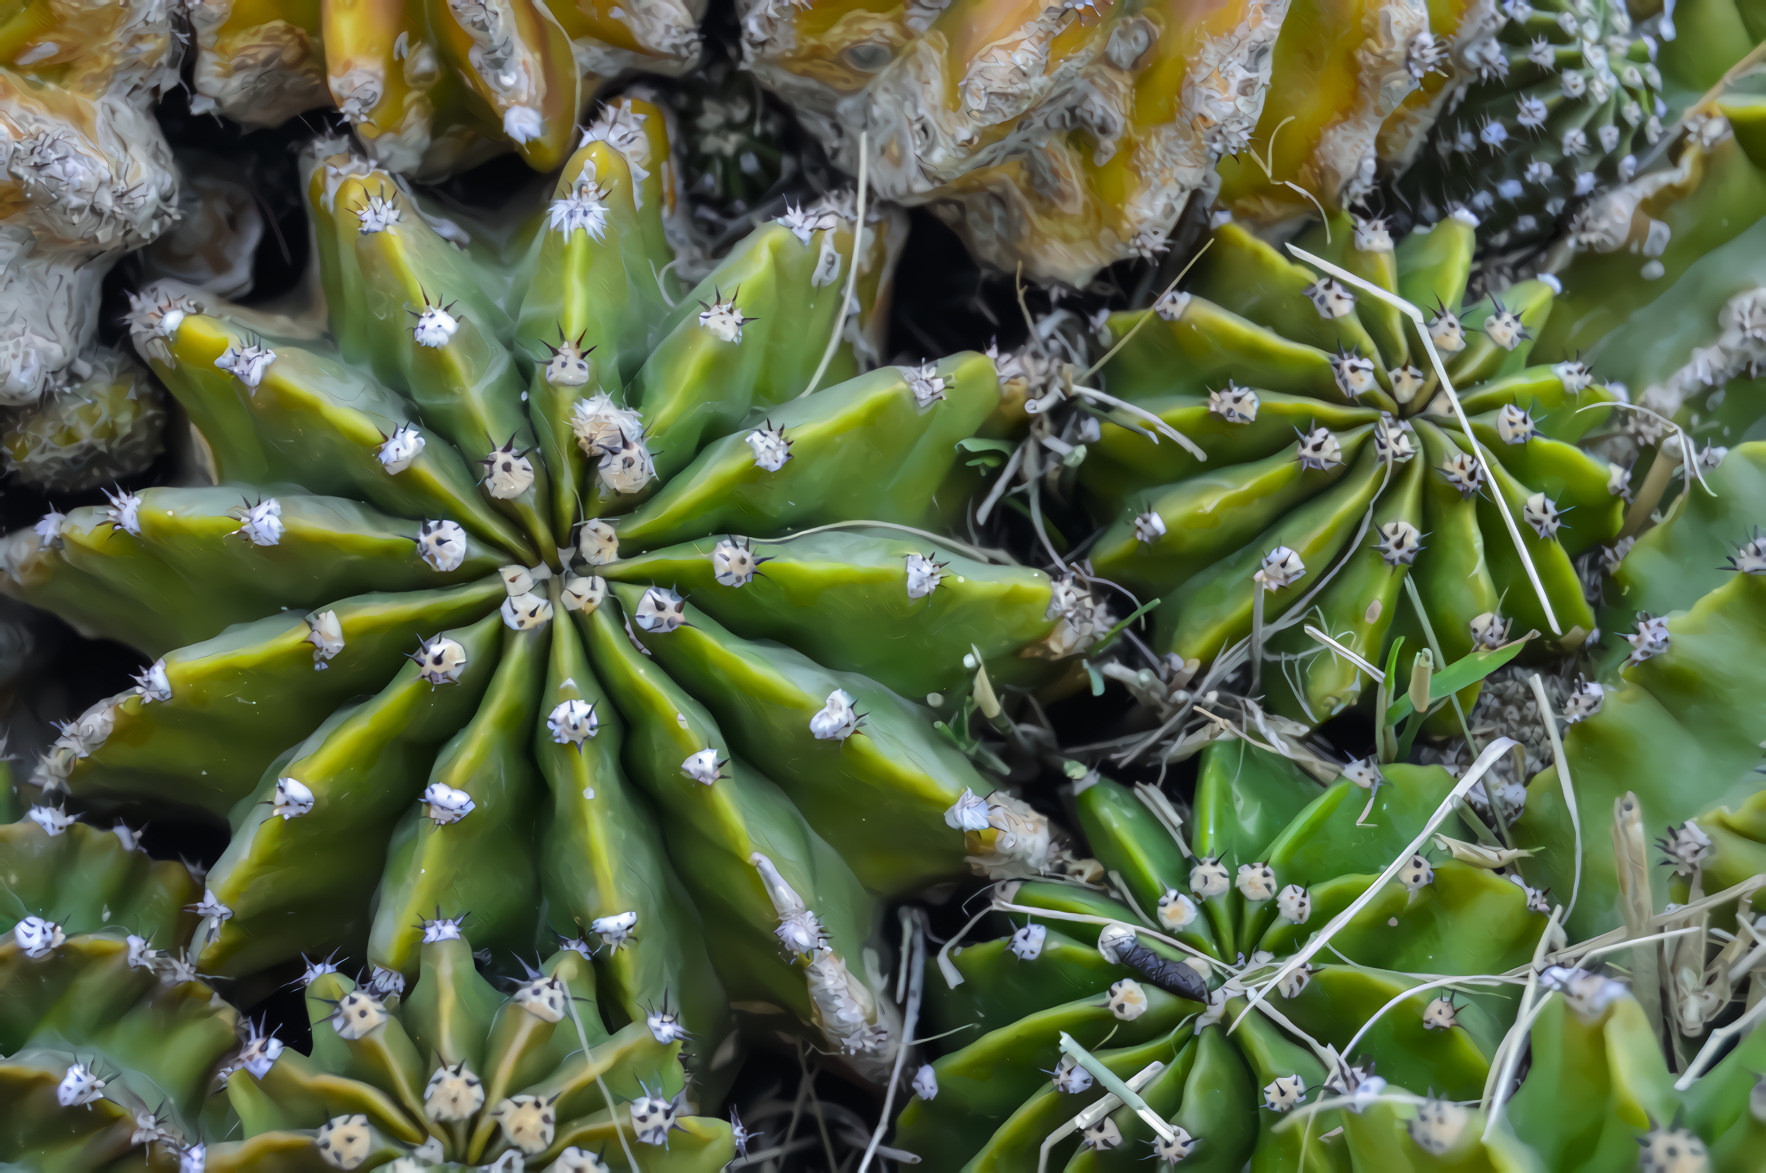 Cactus, Thorns and Skewers